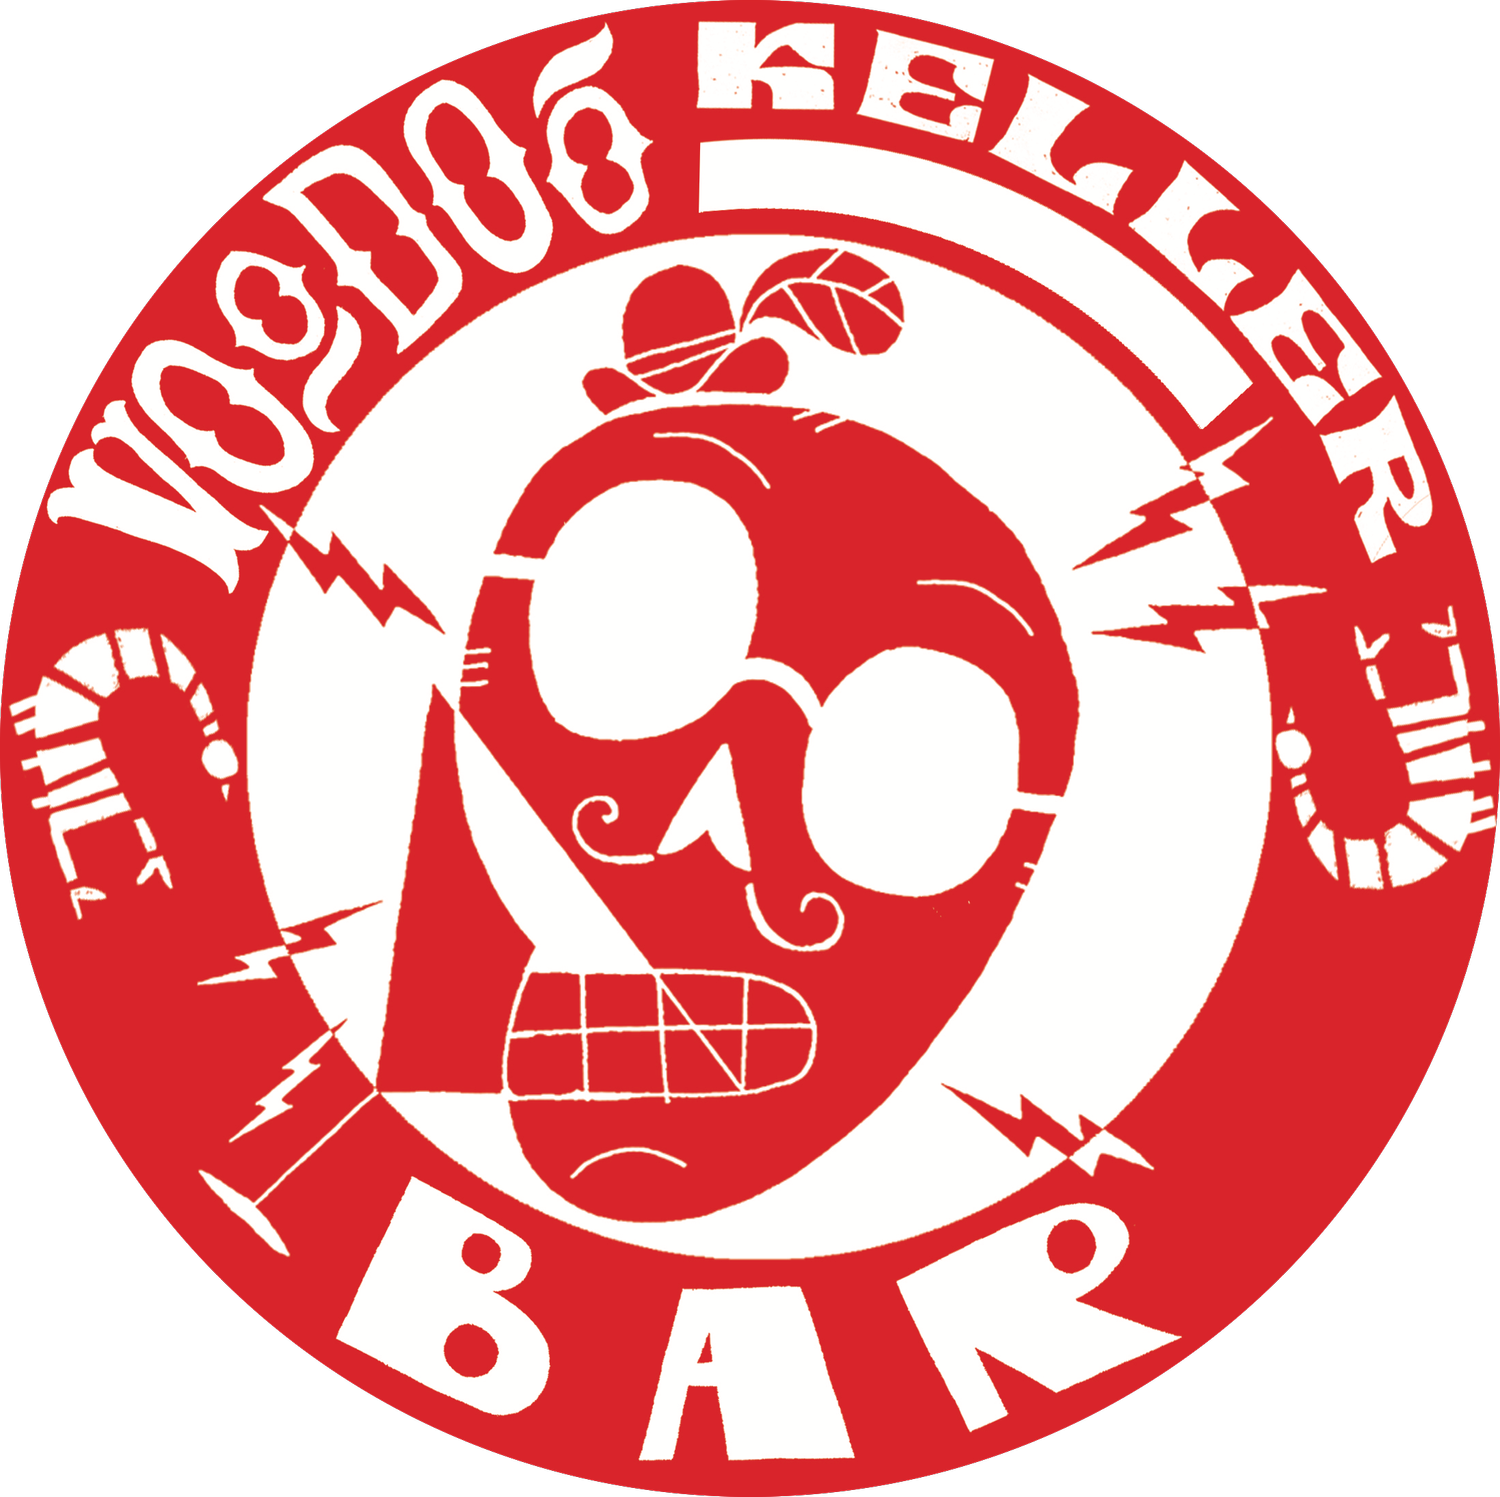 Voodoo Keller Bar